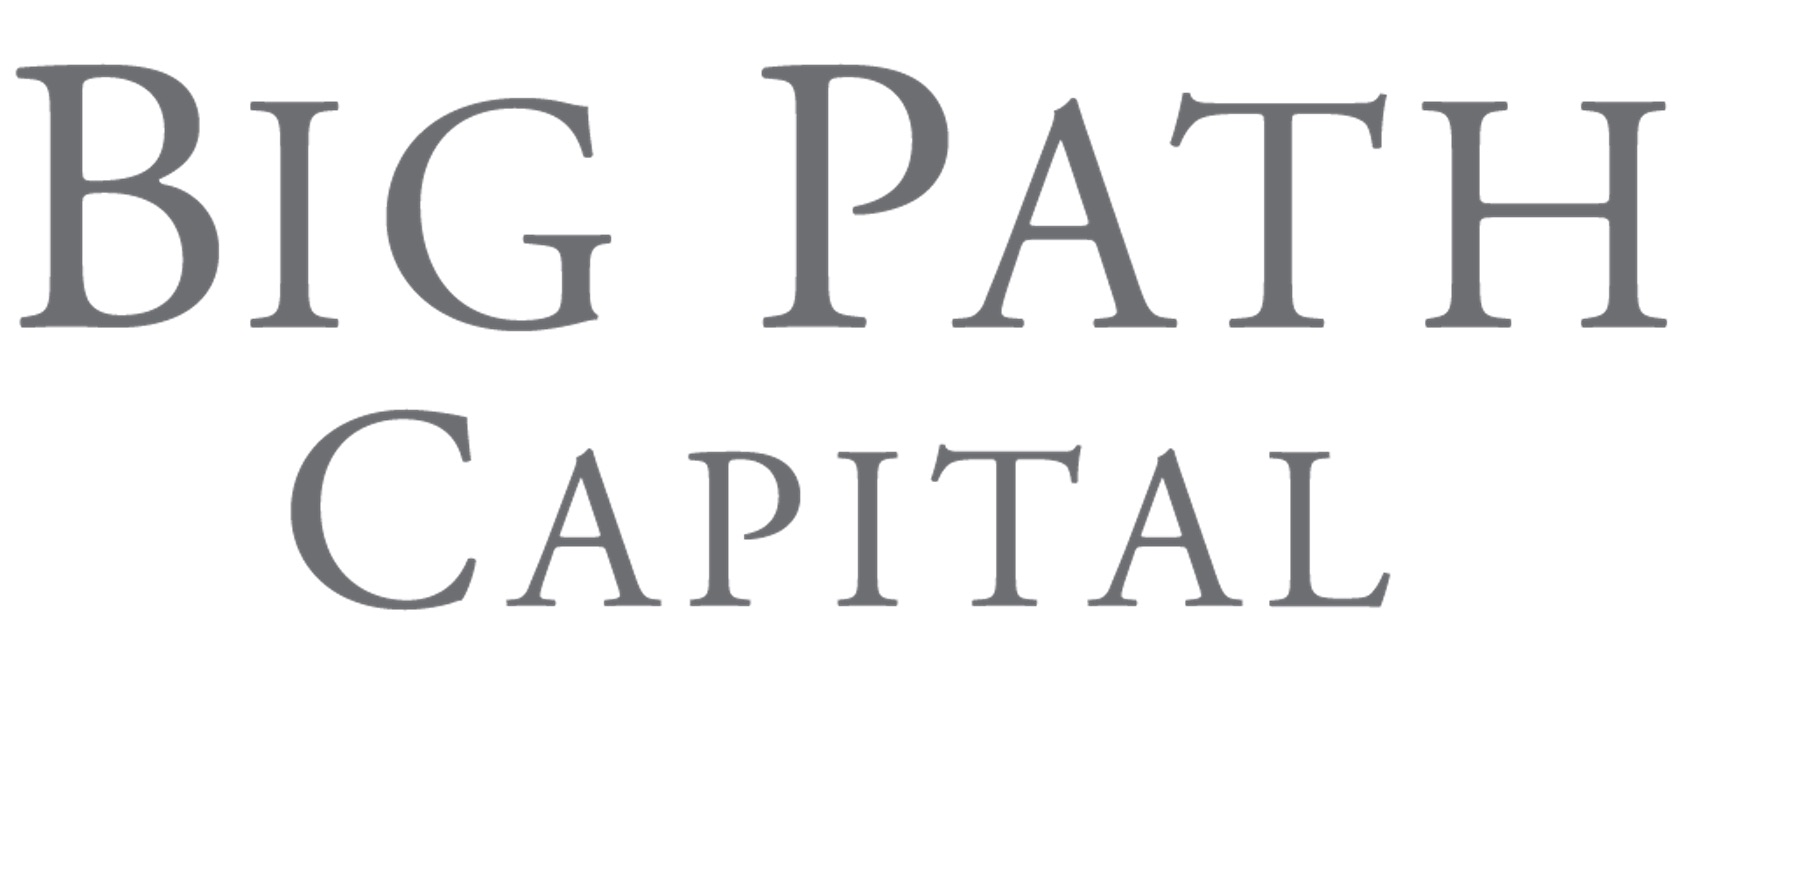 Big Path Capital logo